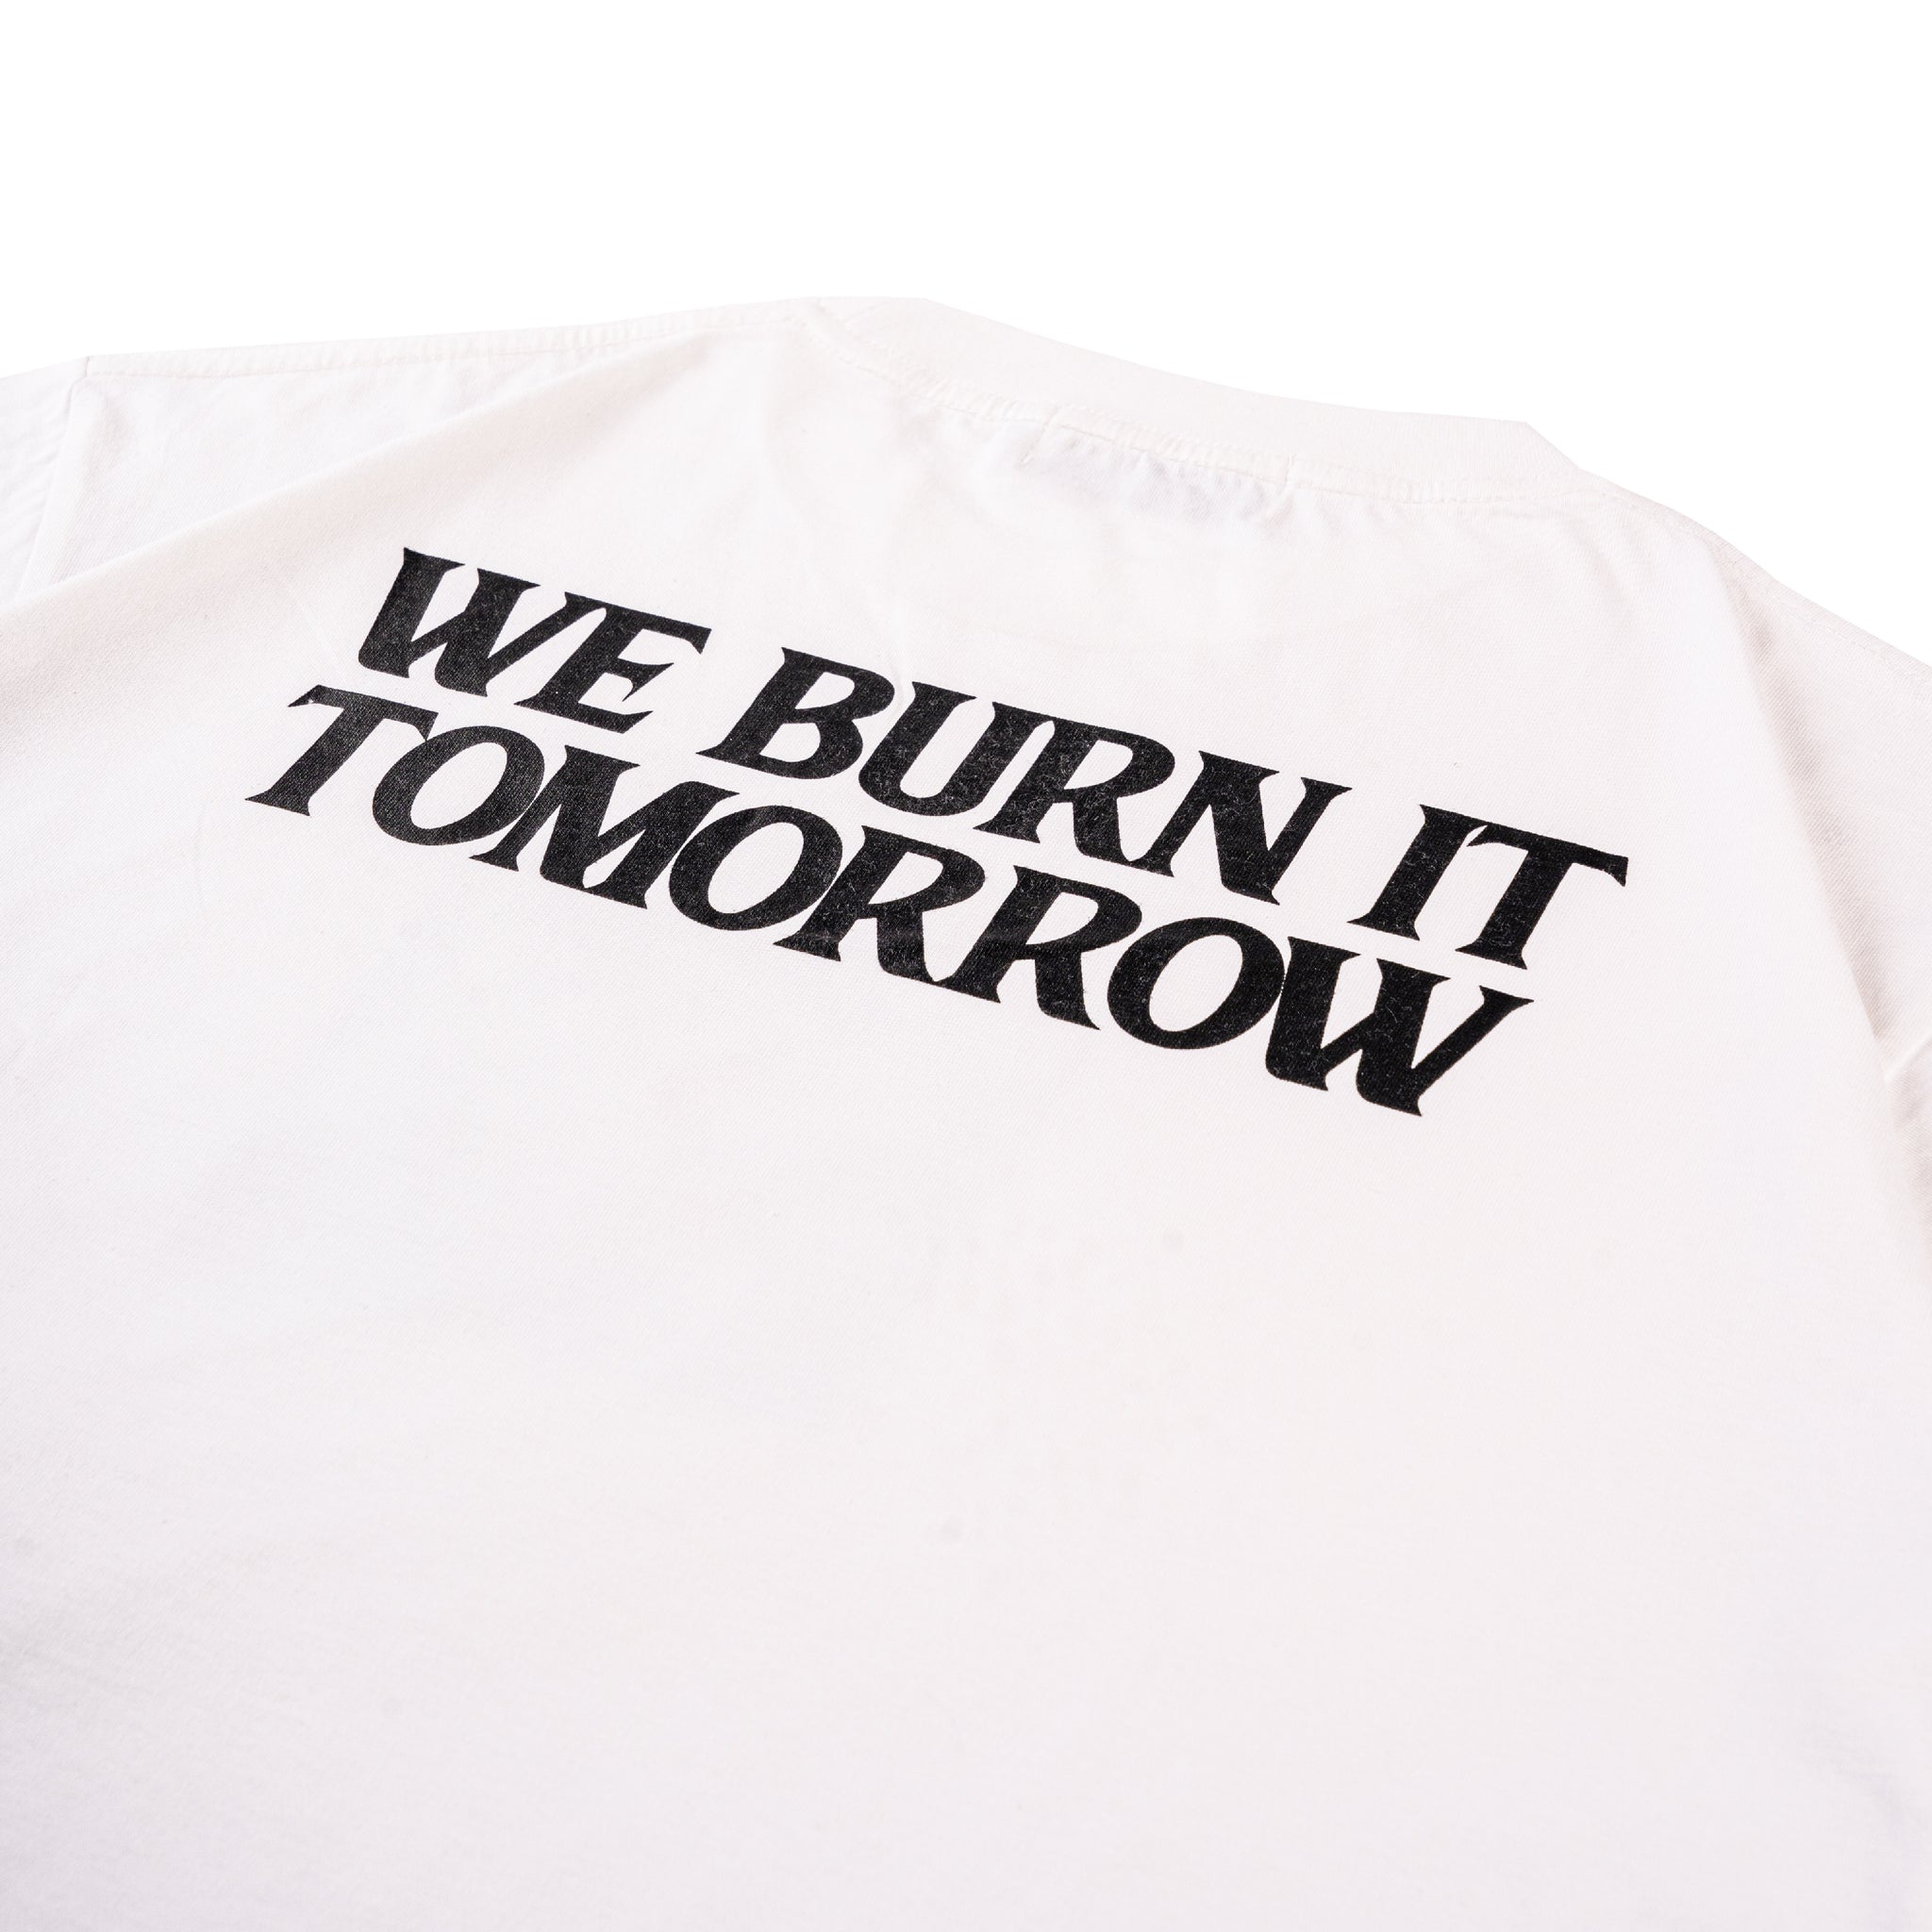 WE BURN IT TOMORROW T-SHIRT